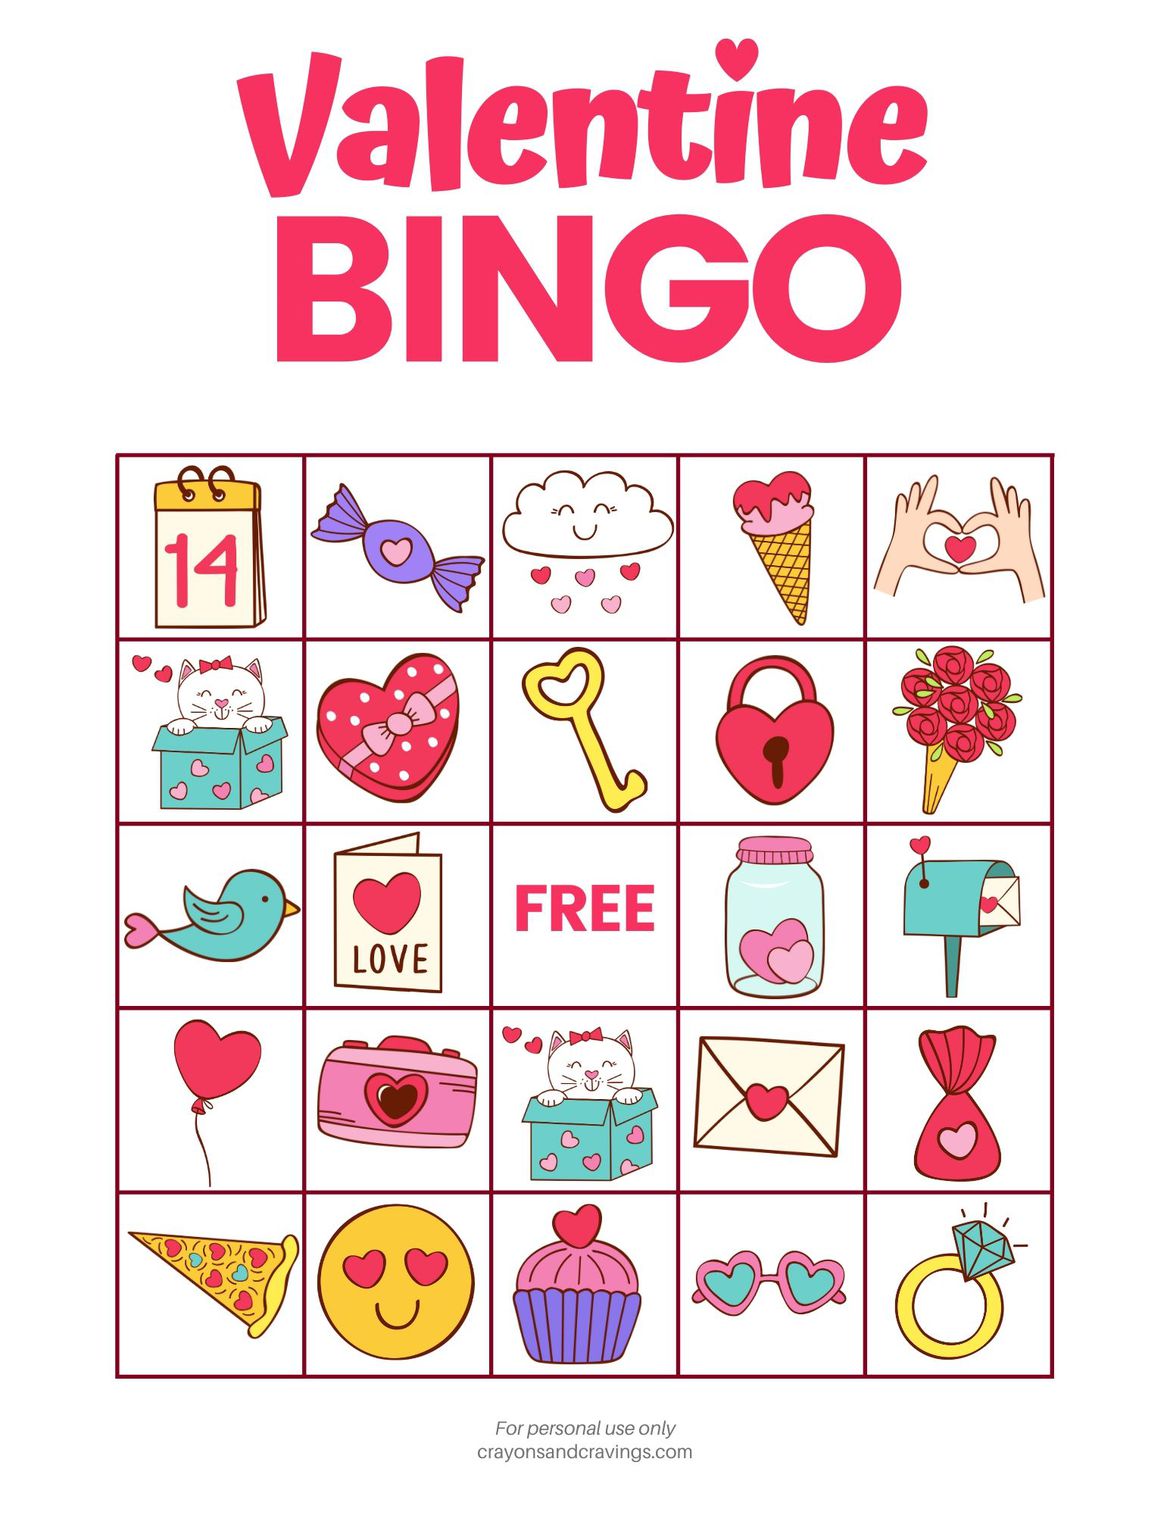 Valentine Bingo FREE Printable Valentine's Day Game with 10 Cards!